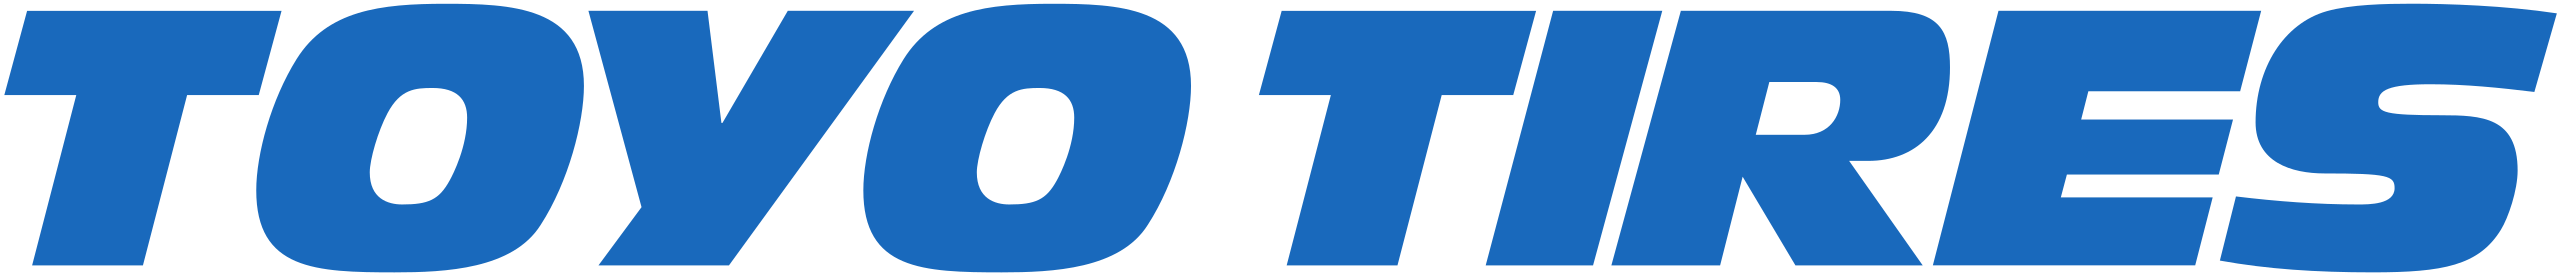 Toyo_Tire_logo